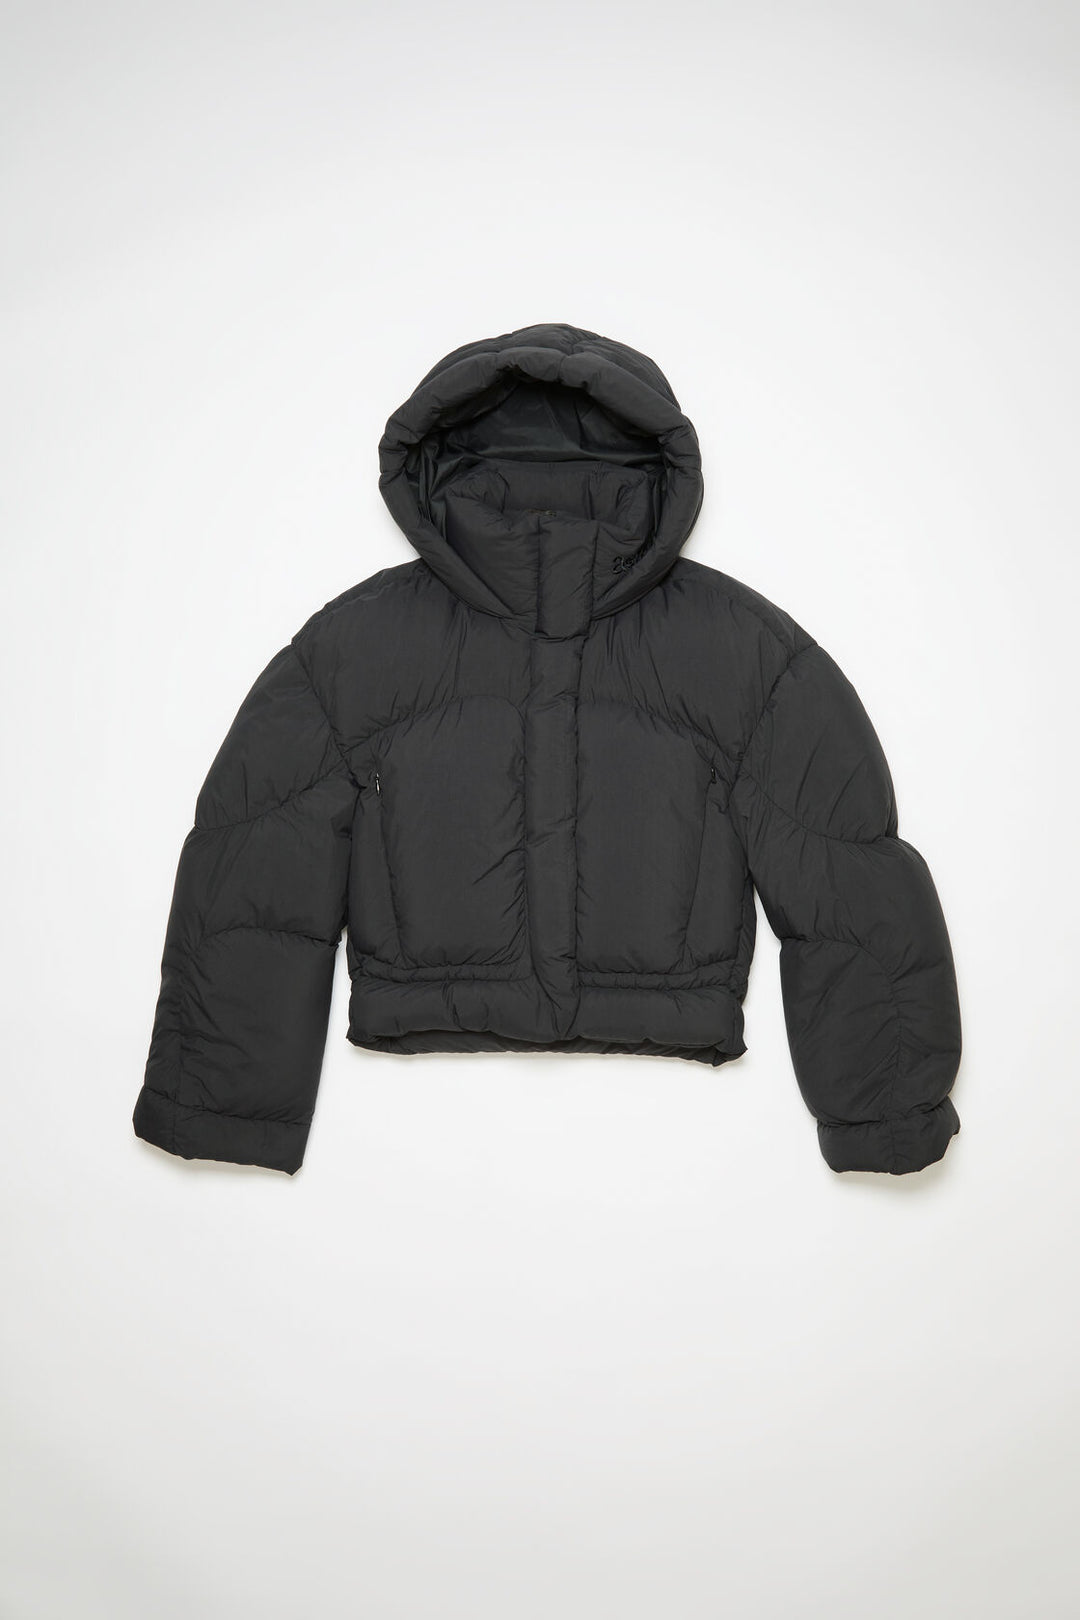 ACNE STUDIOS - Hooded puffer jacket - Black - Dale